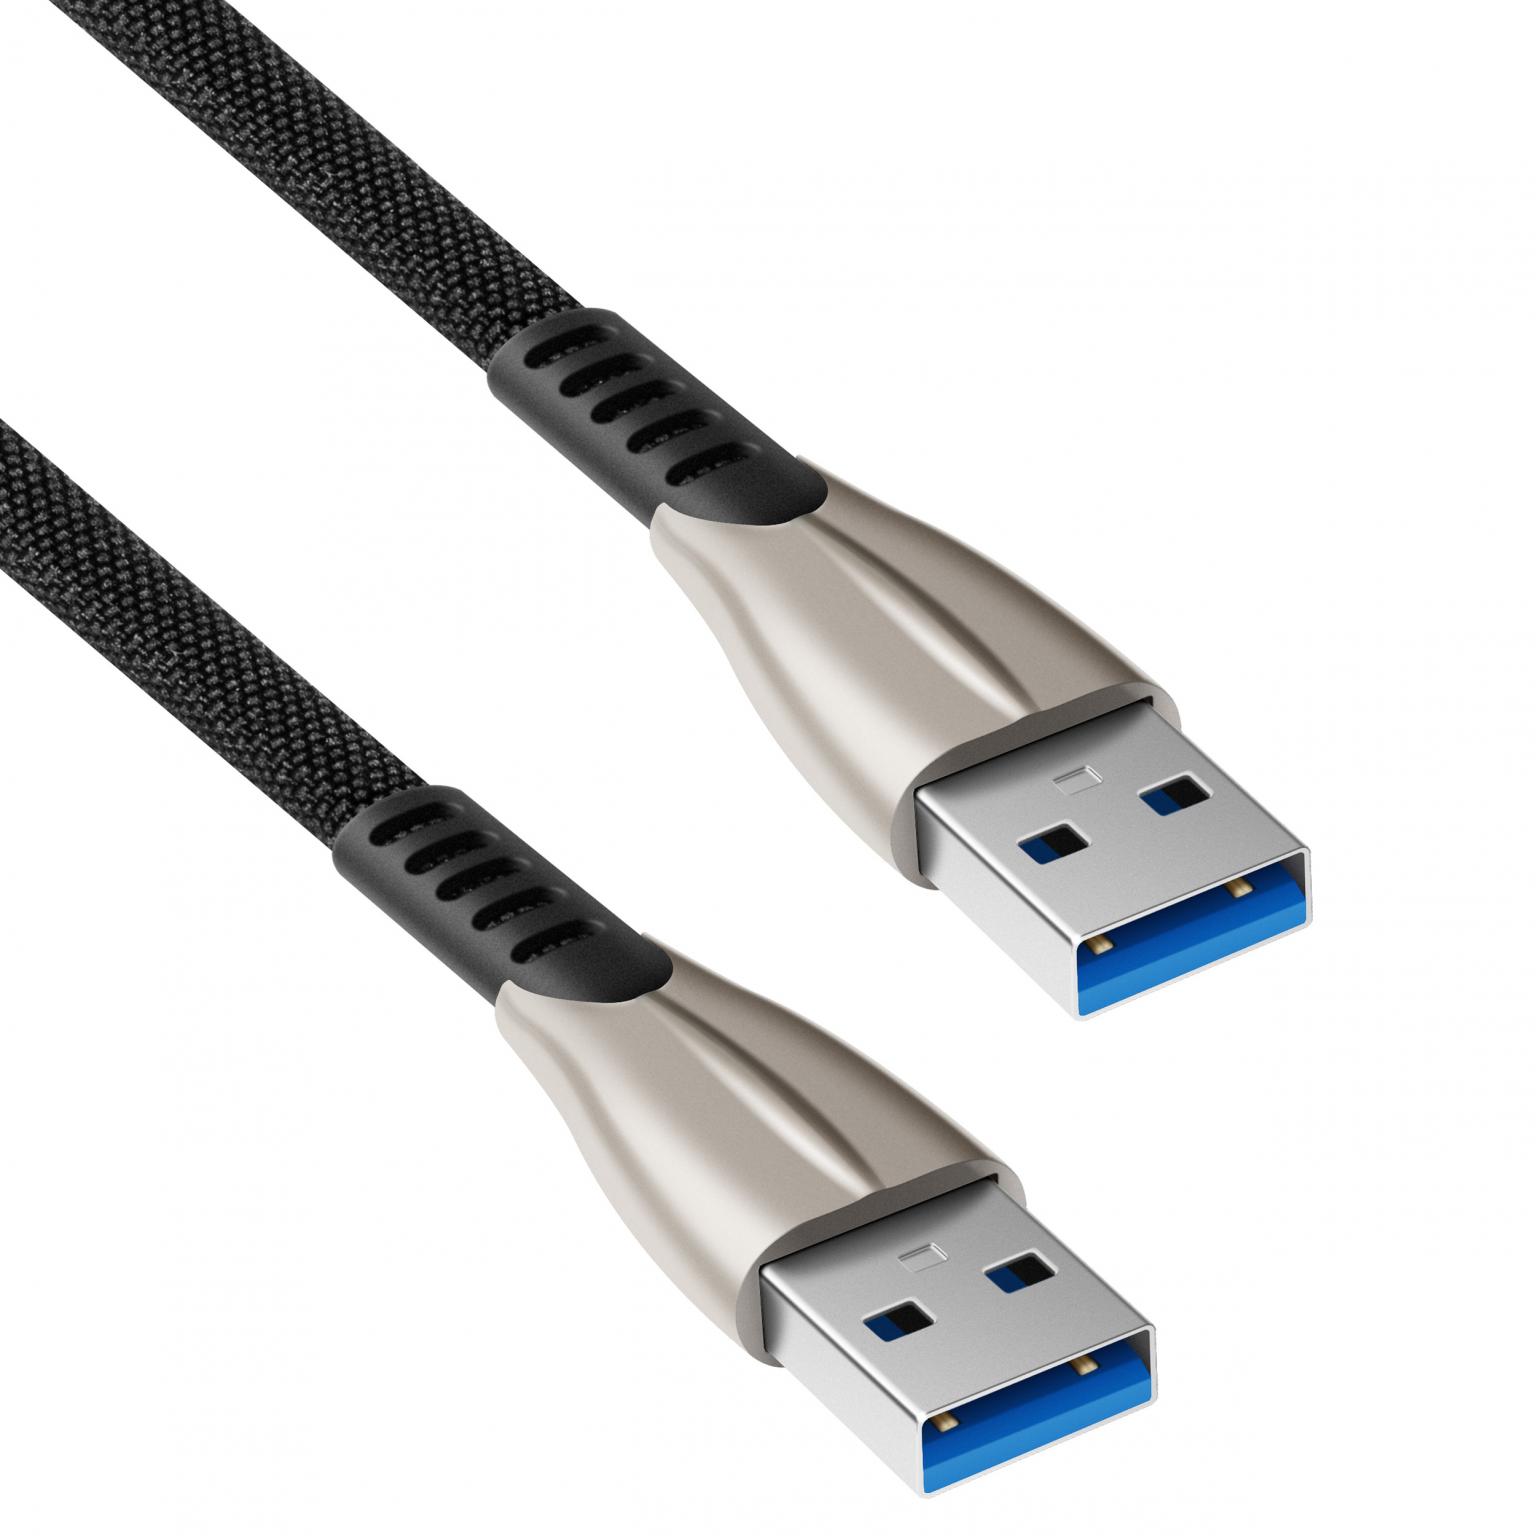 USB 3.0 kabel - Allteq